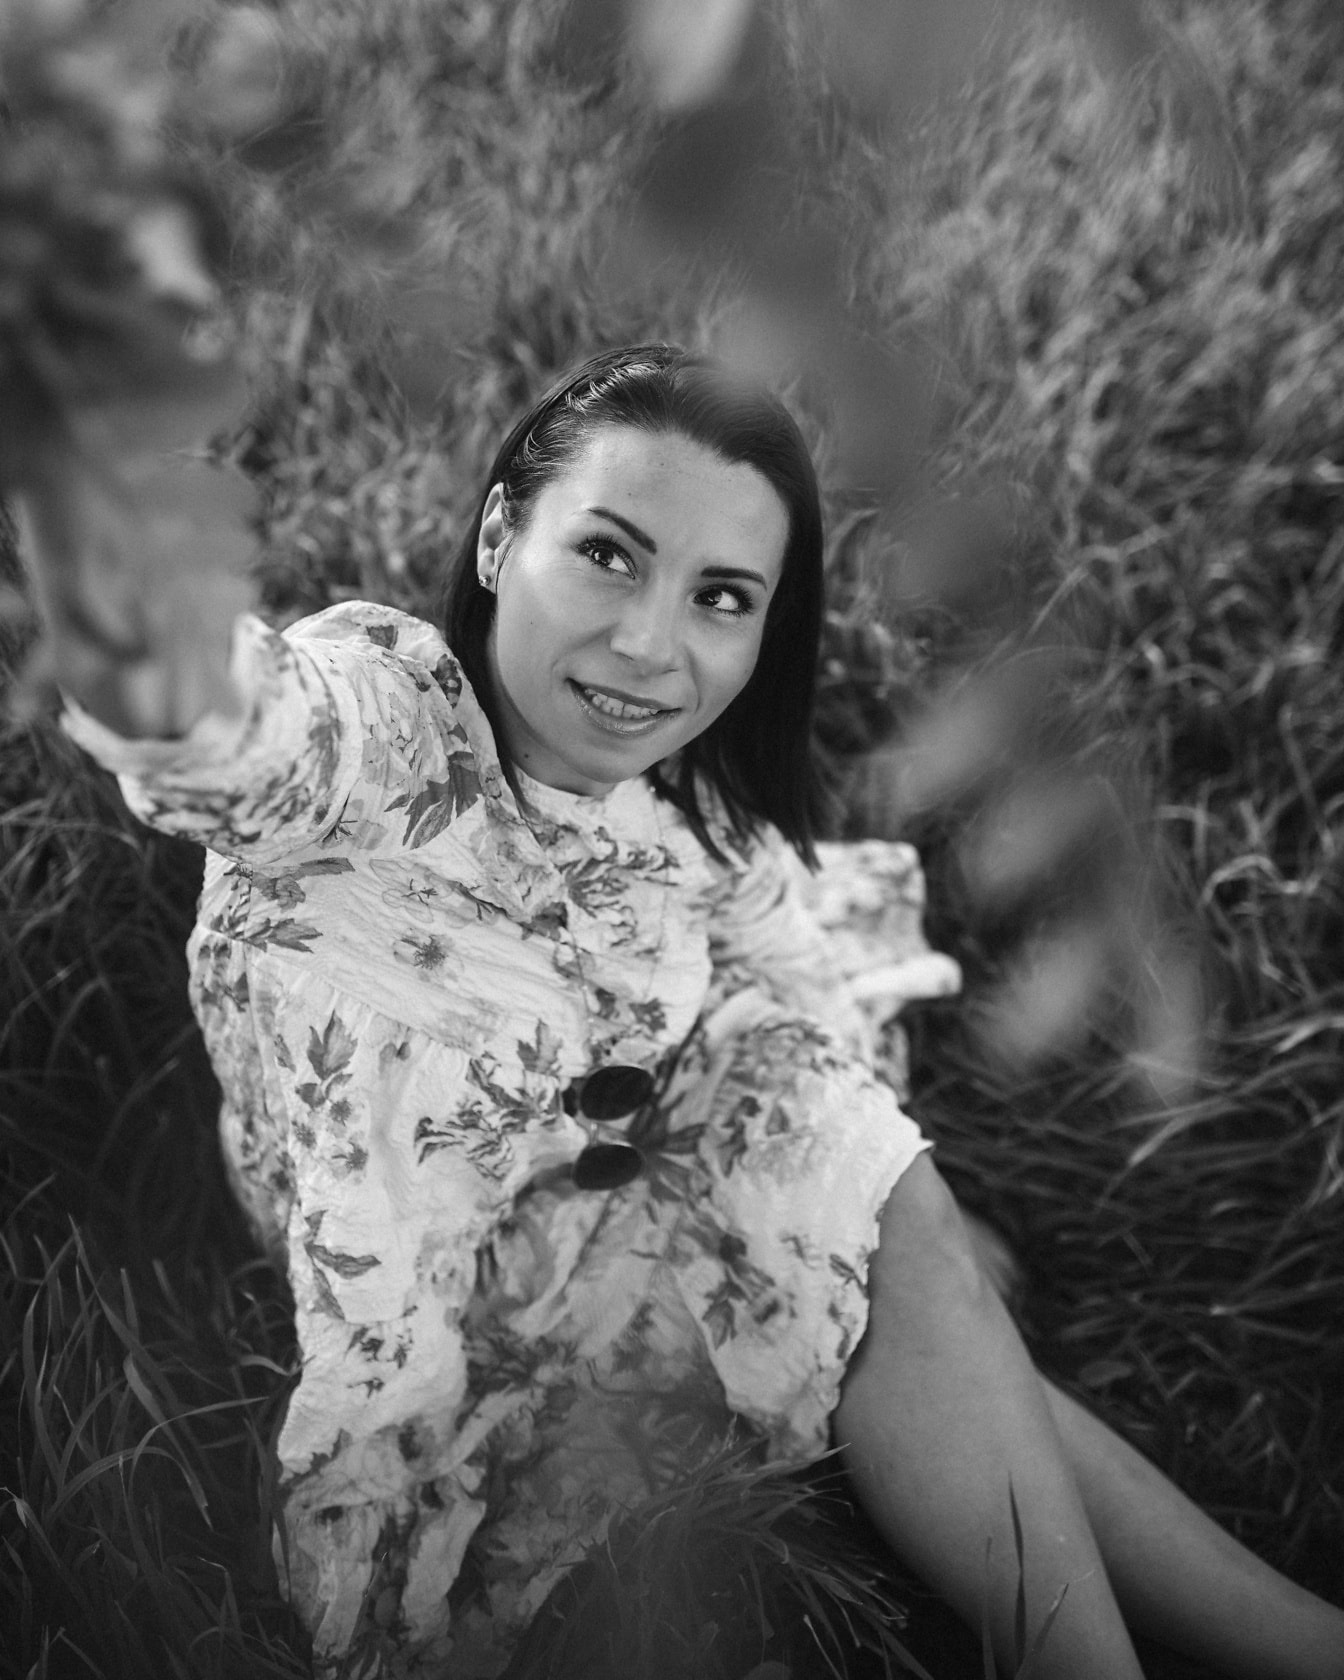 Potret hitam putih seorang wanita cantik tersenyum duduk di rumput